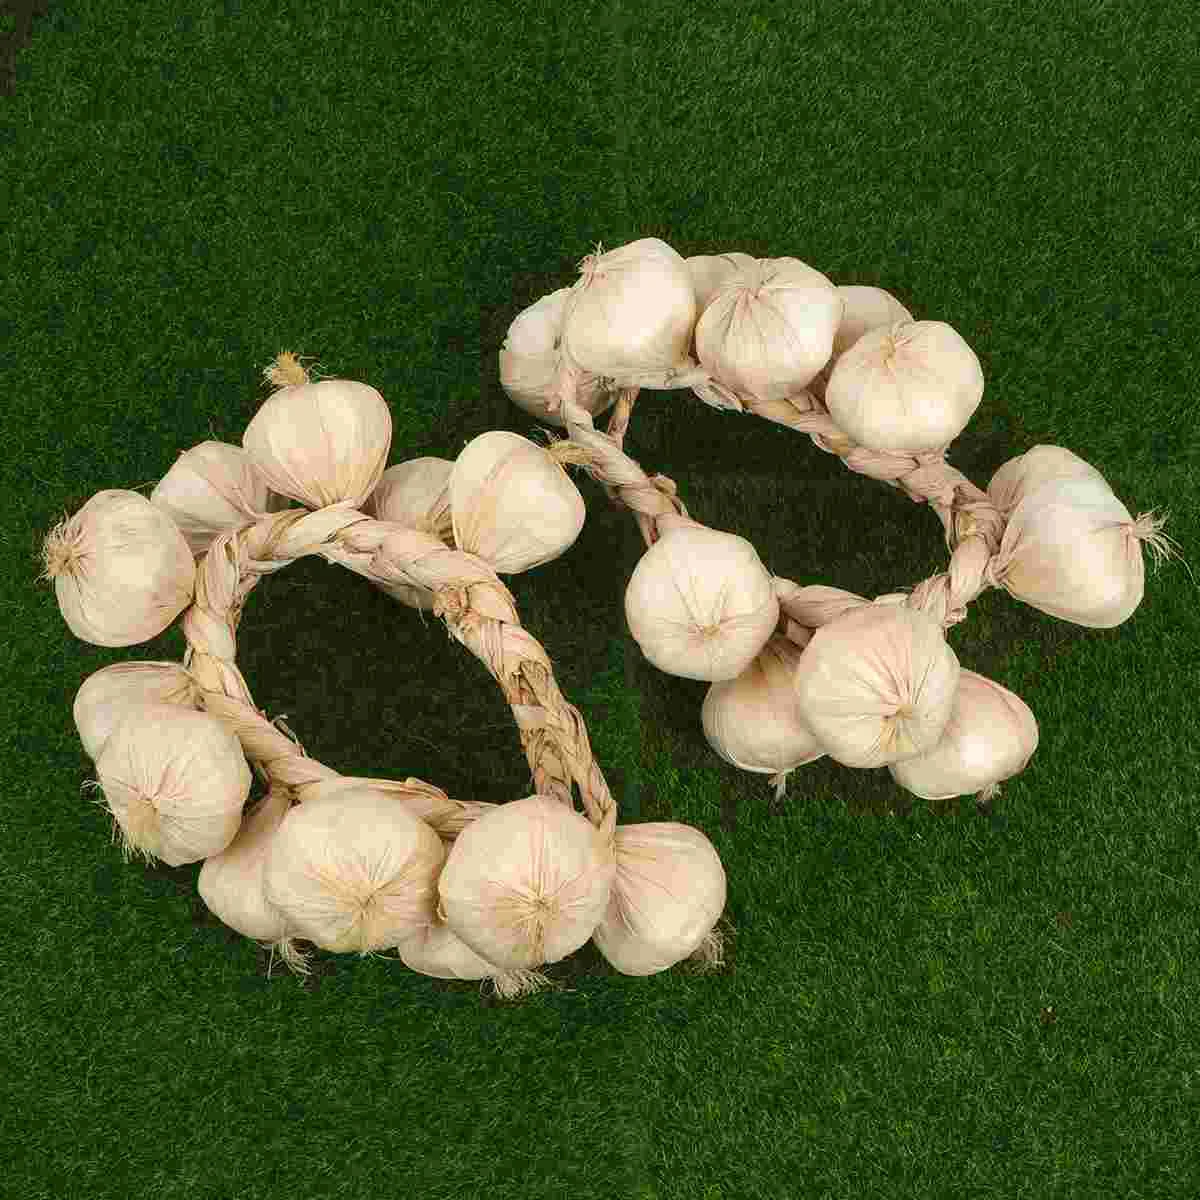 

Garlic Artificial String Fake Hanging Vegetable Vegetables Decor Model Decoration Props Strings Lifelike Simulation Photography